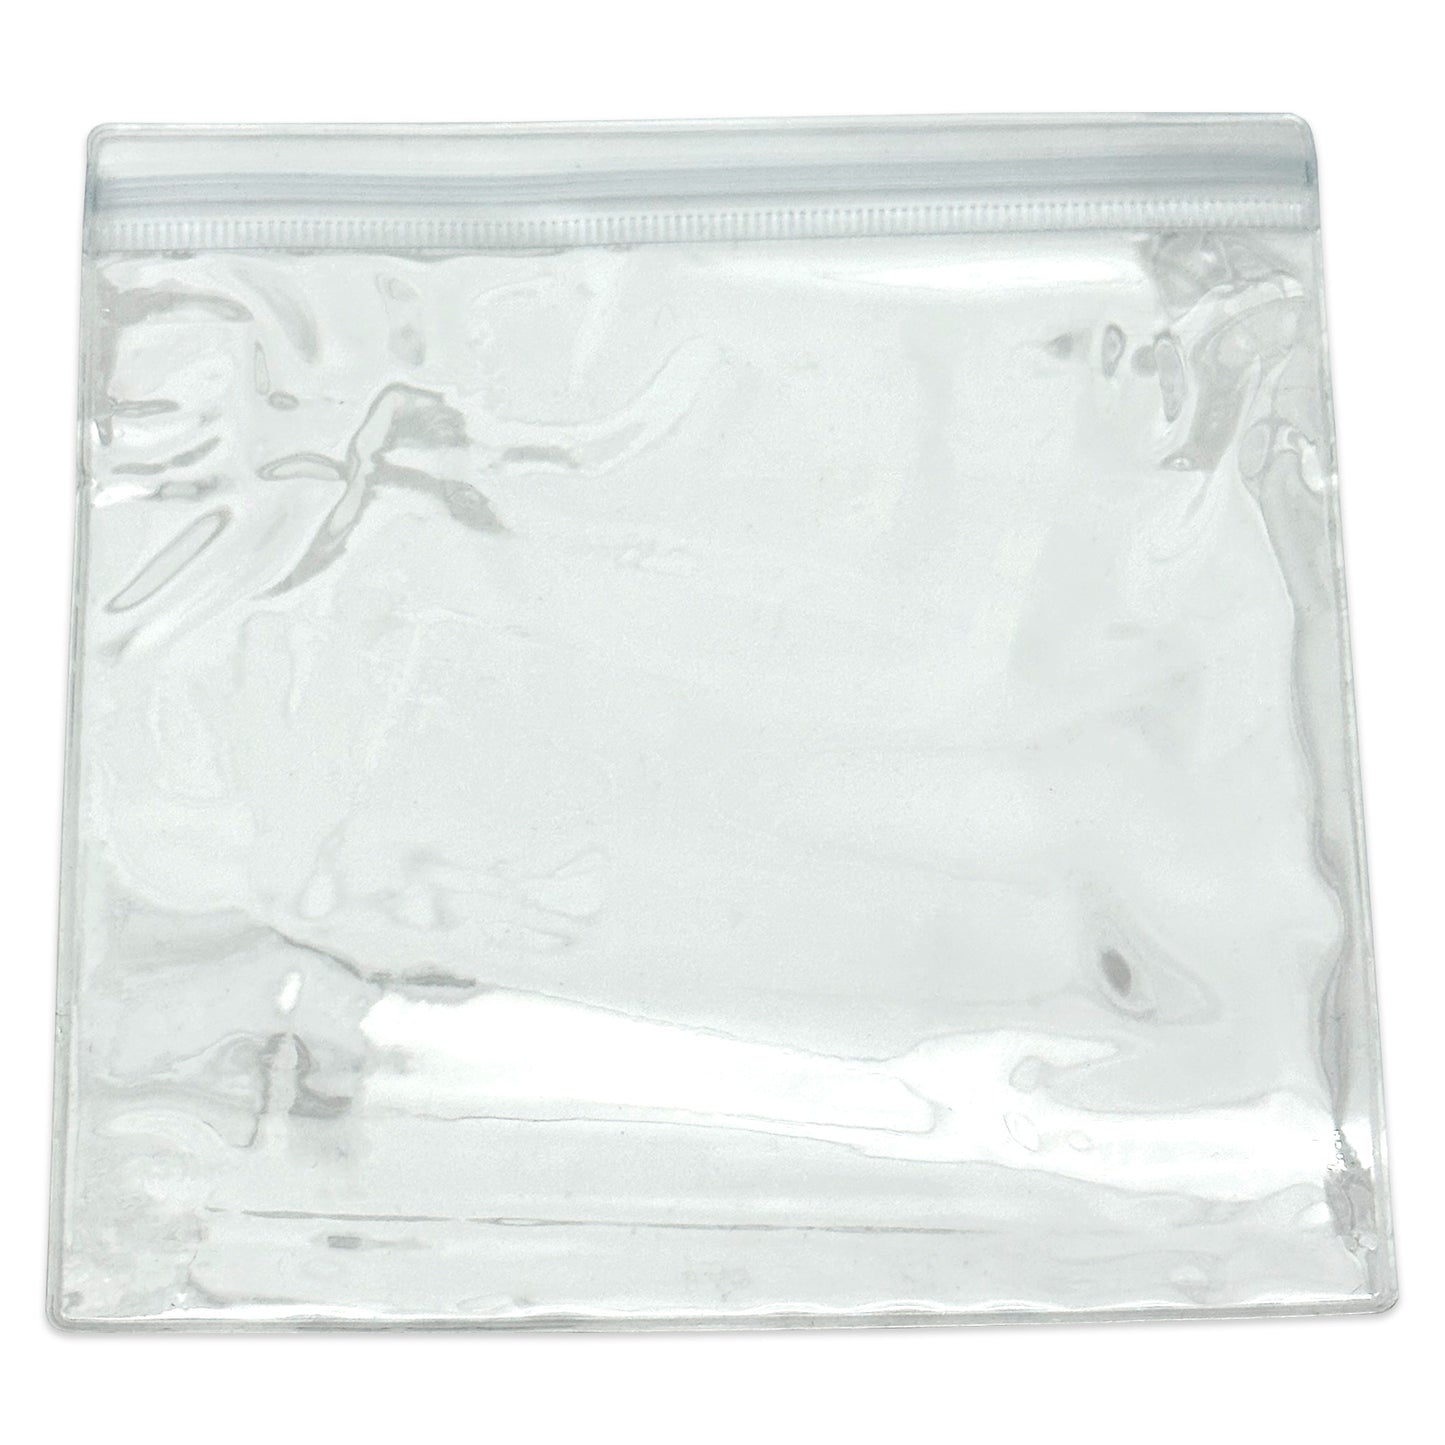 5 7/8" x 5 7/8" Resealable 4 Mil Thick Translucent Zip Plastic Bag